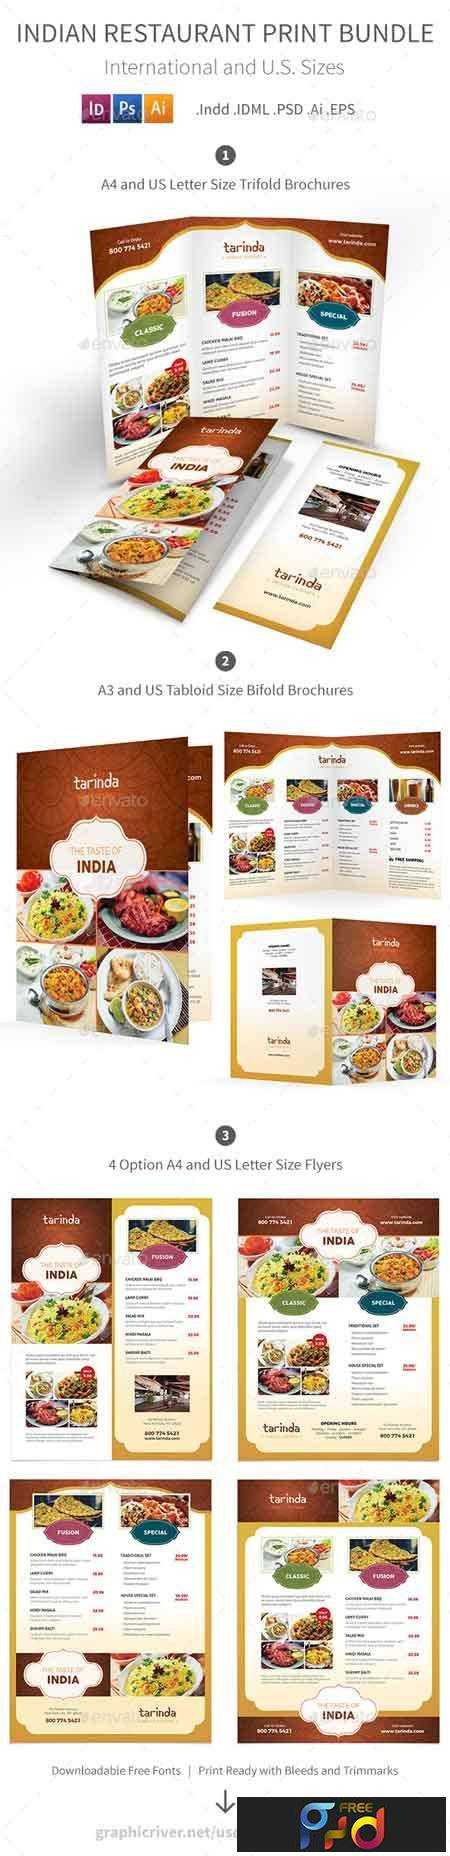 FreePsdVn.com_1702525_PRINT TEMPLATE_indian_restaurant_menu_print_bundle_19289137